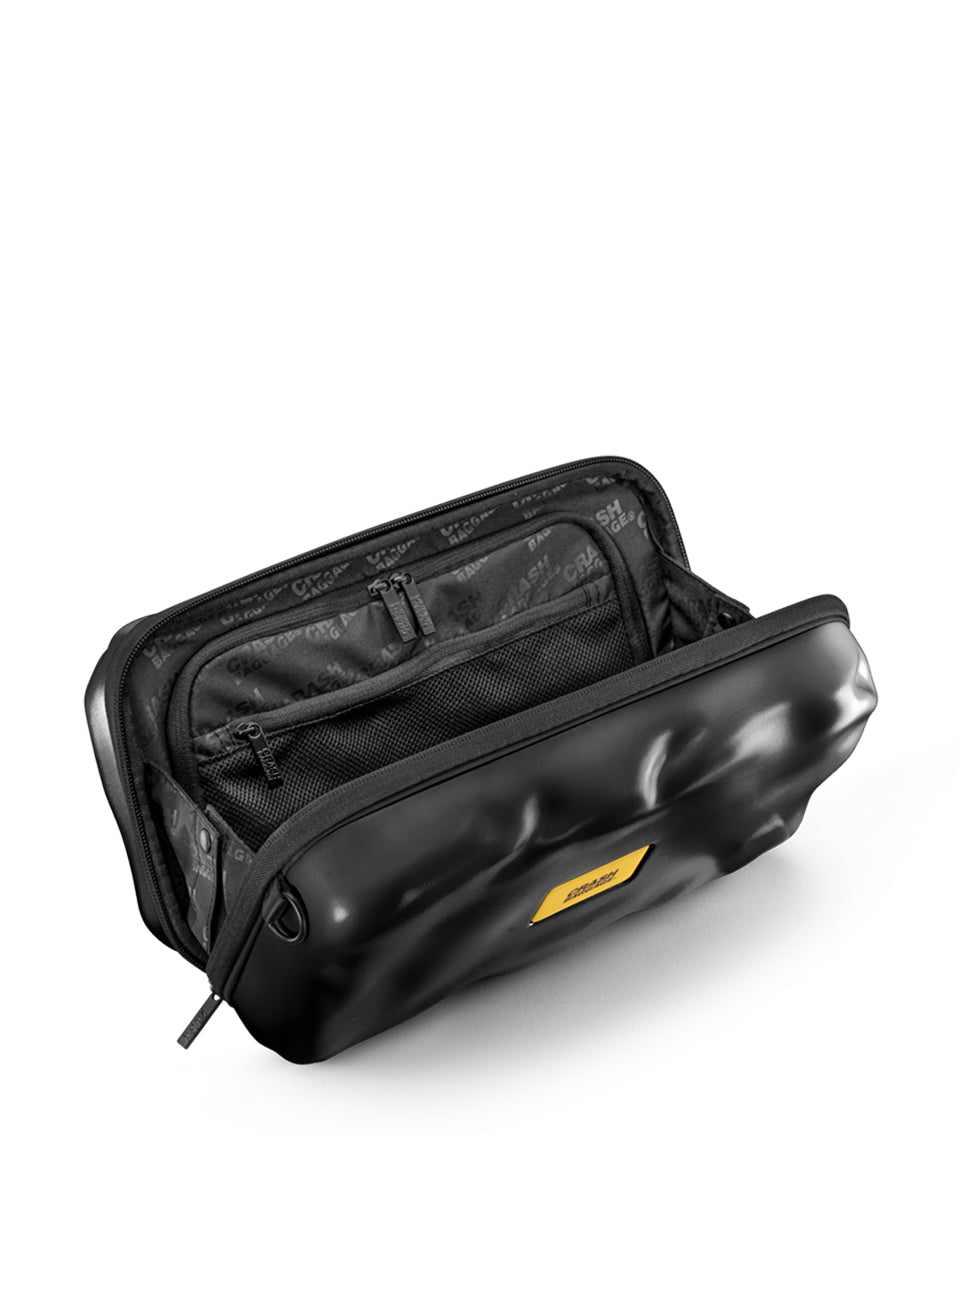 Crash Baggage Maxi Icon Travel Pouch, CB371 001, Black